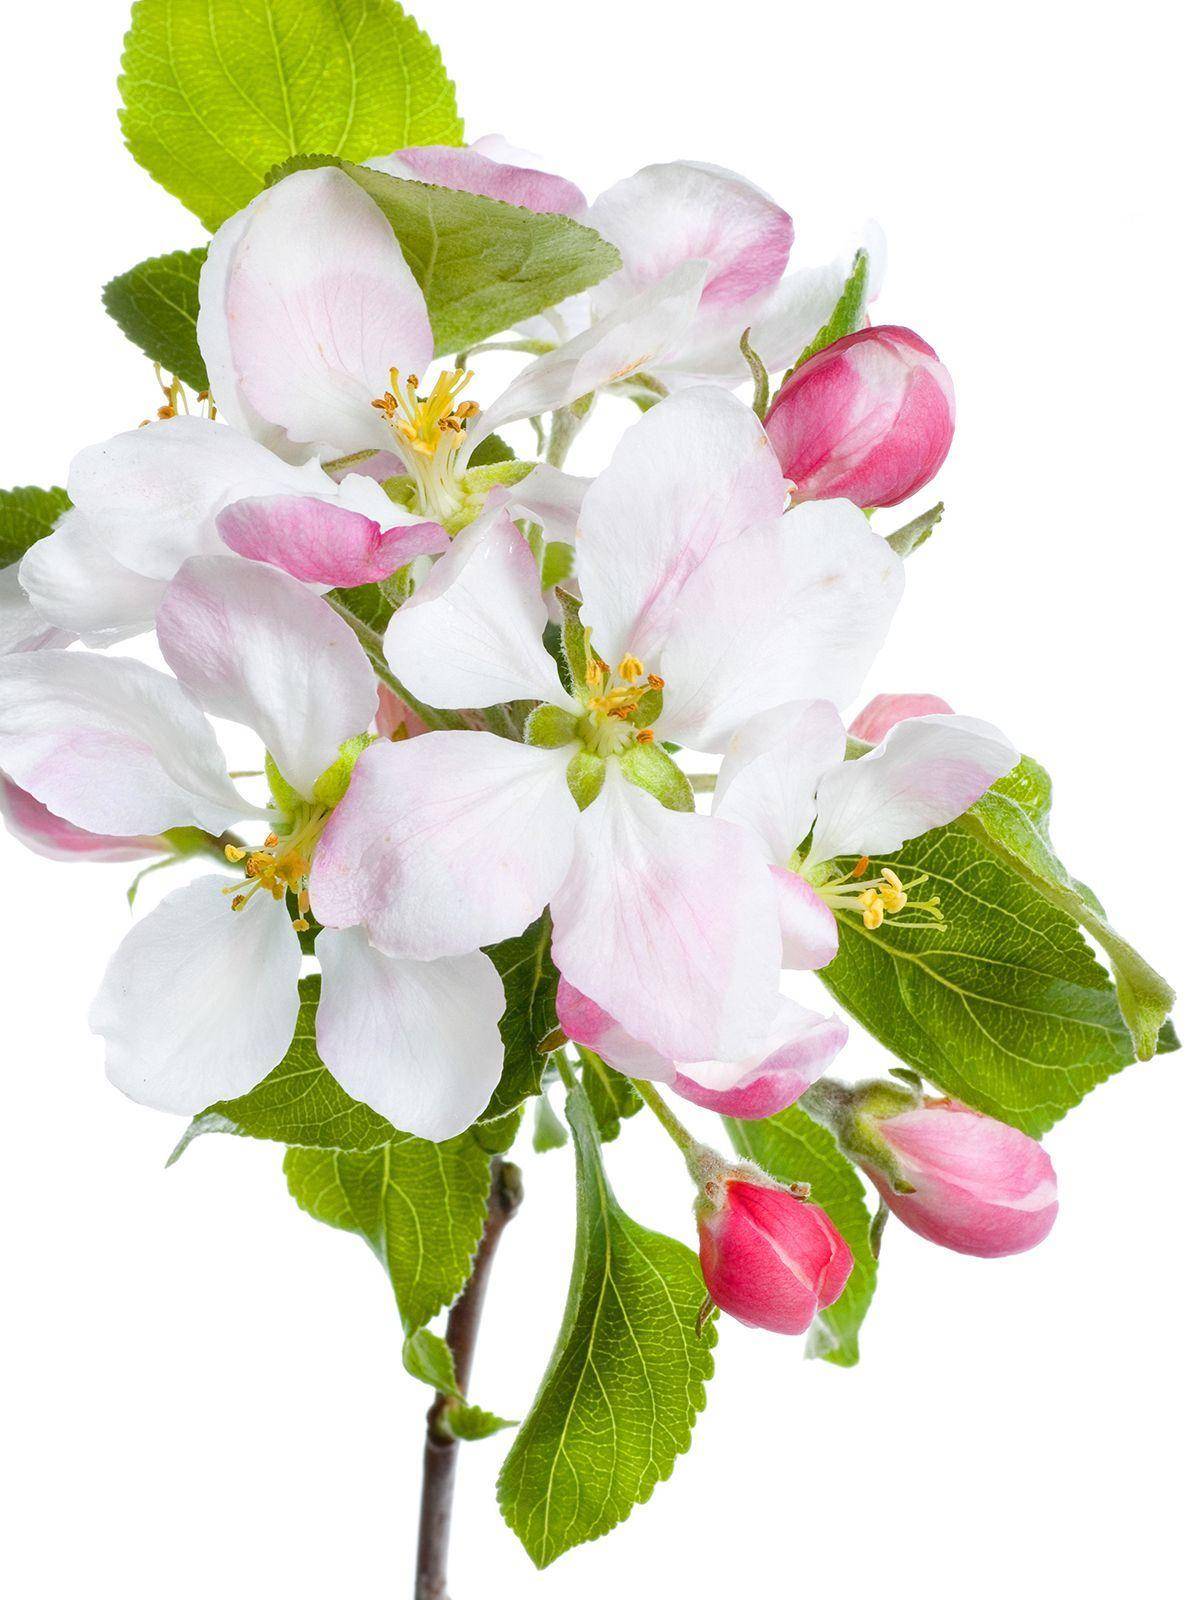 Фотообои Цветущая яблоня Артикул 3073, купить фотообои на стену ТМ Walldeco